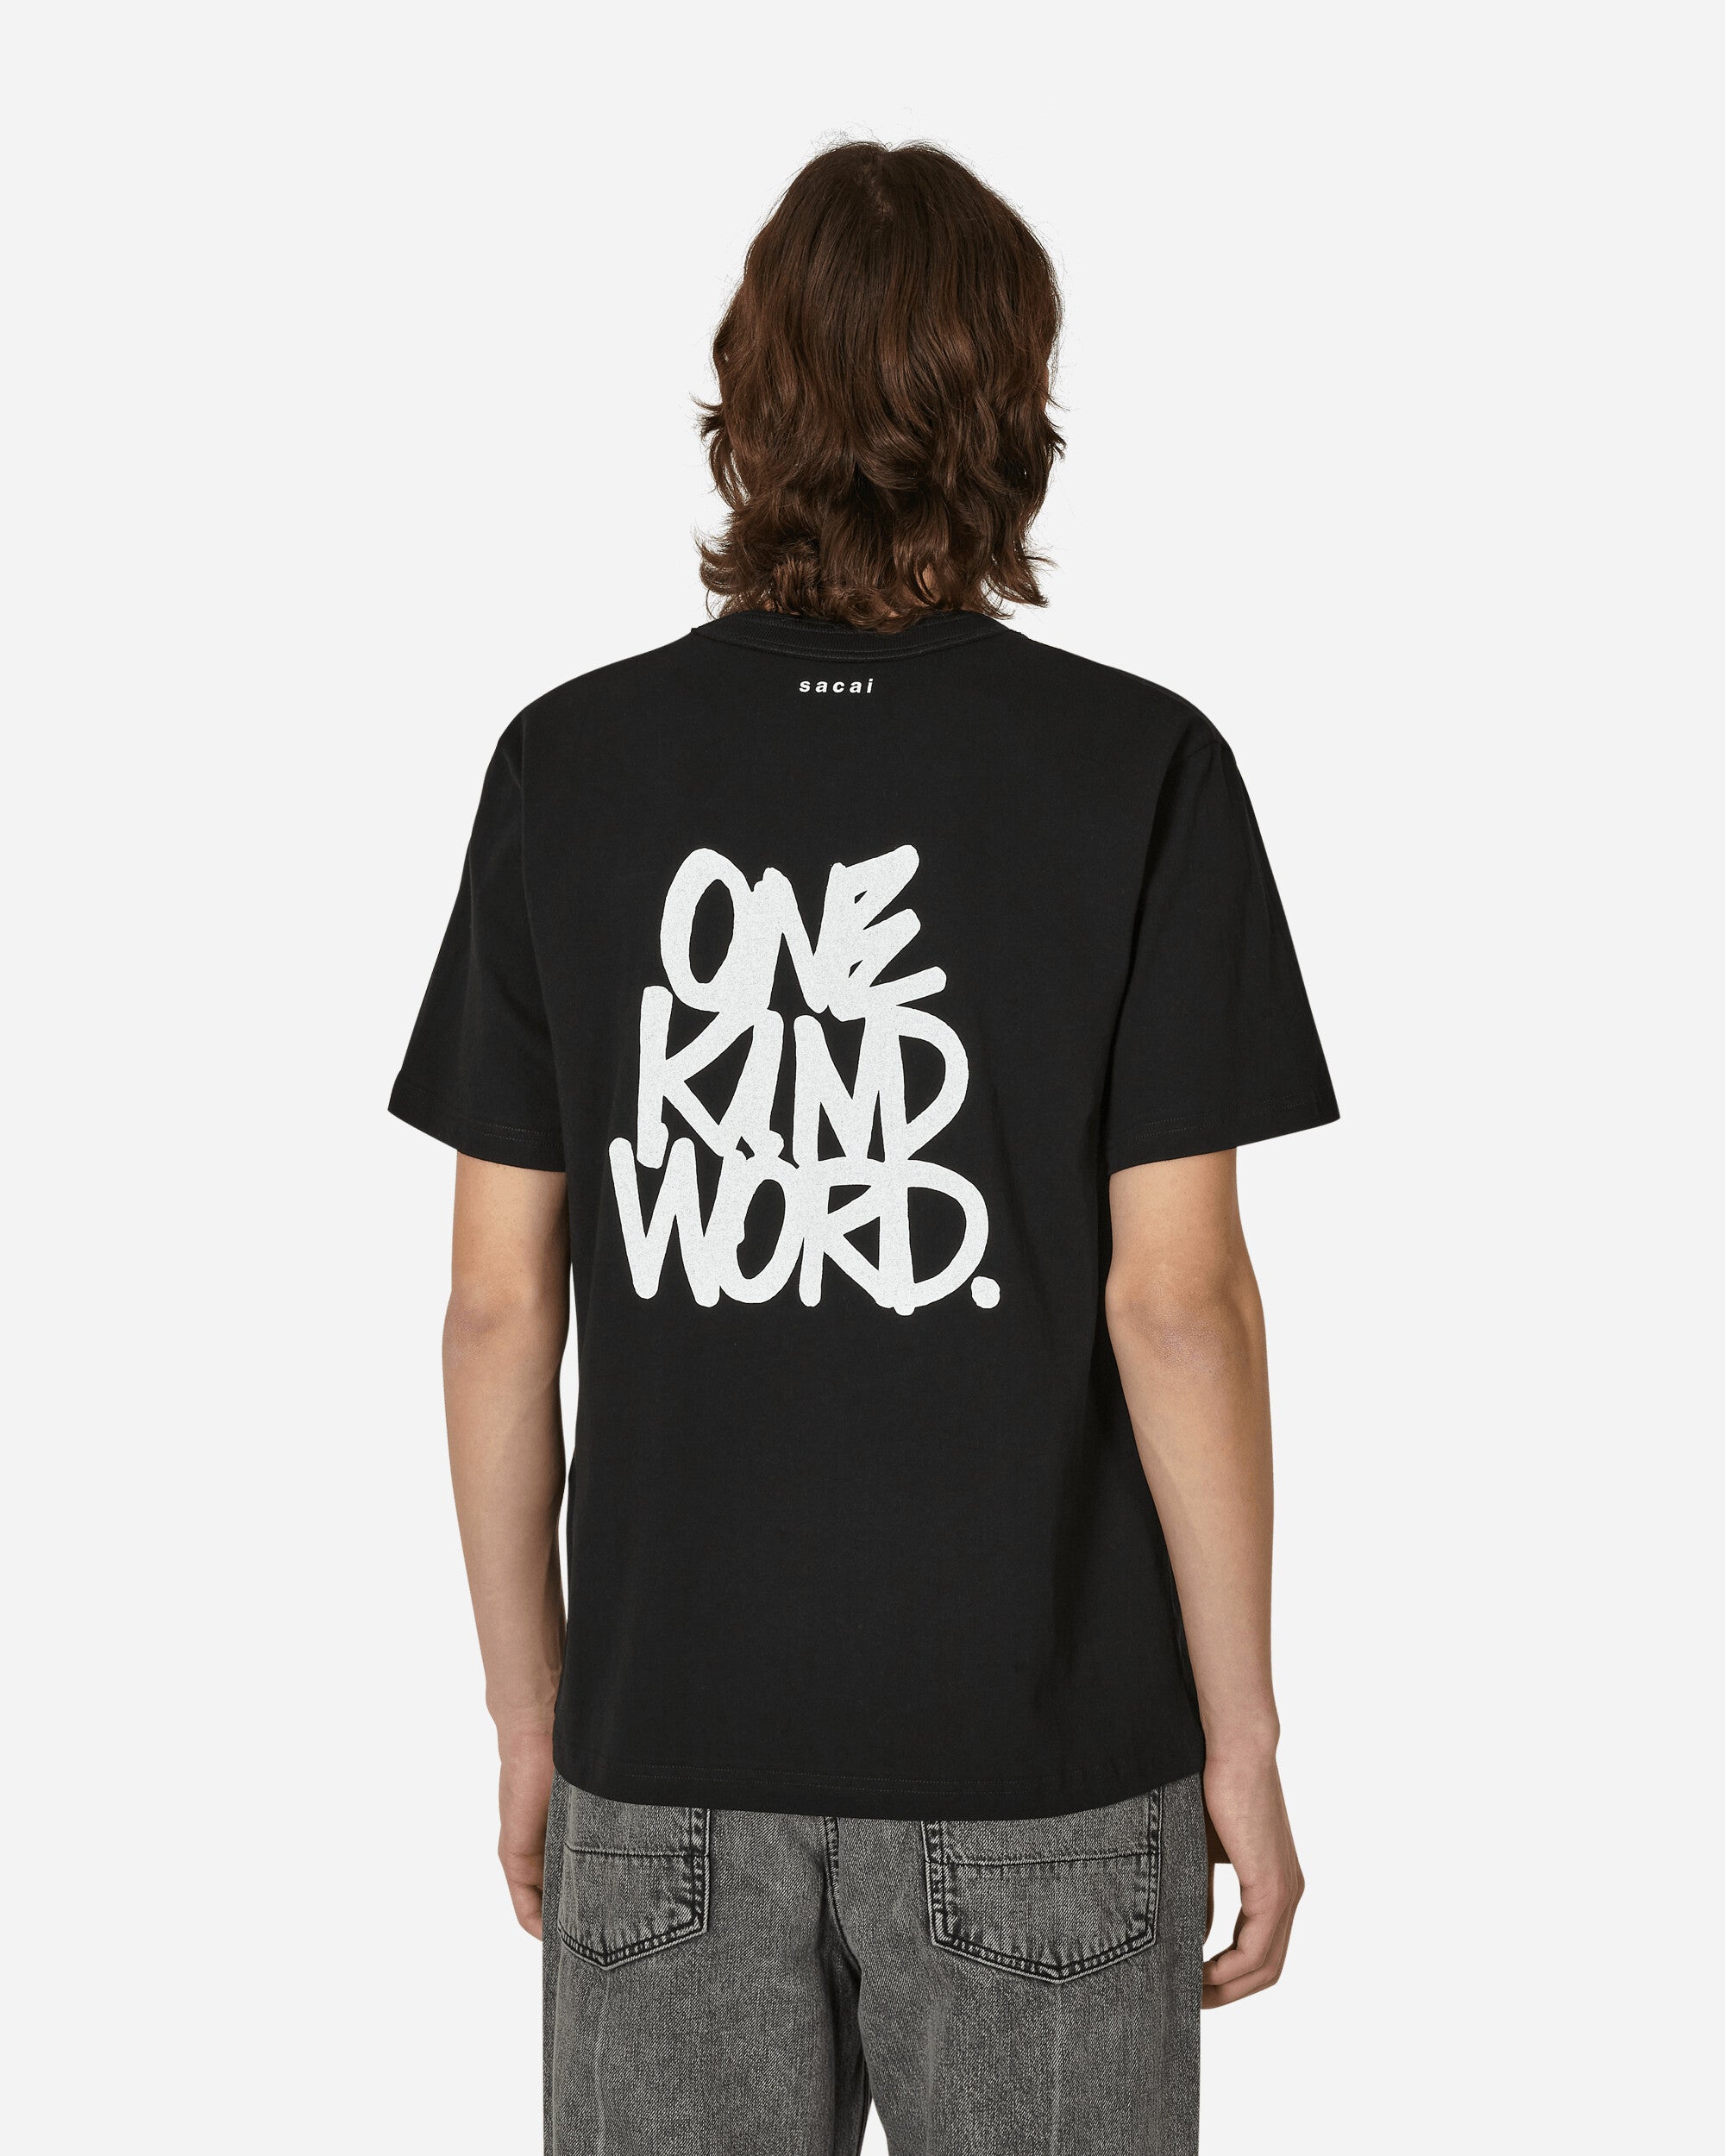 Sacai Eric Haze / Onekindword. T-Shirt Black T-Shirts Shortsleeve 23-0464S 001